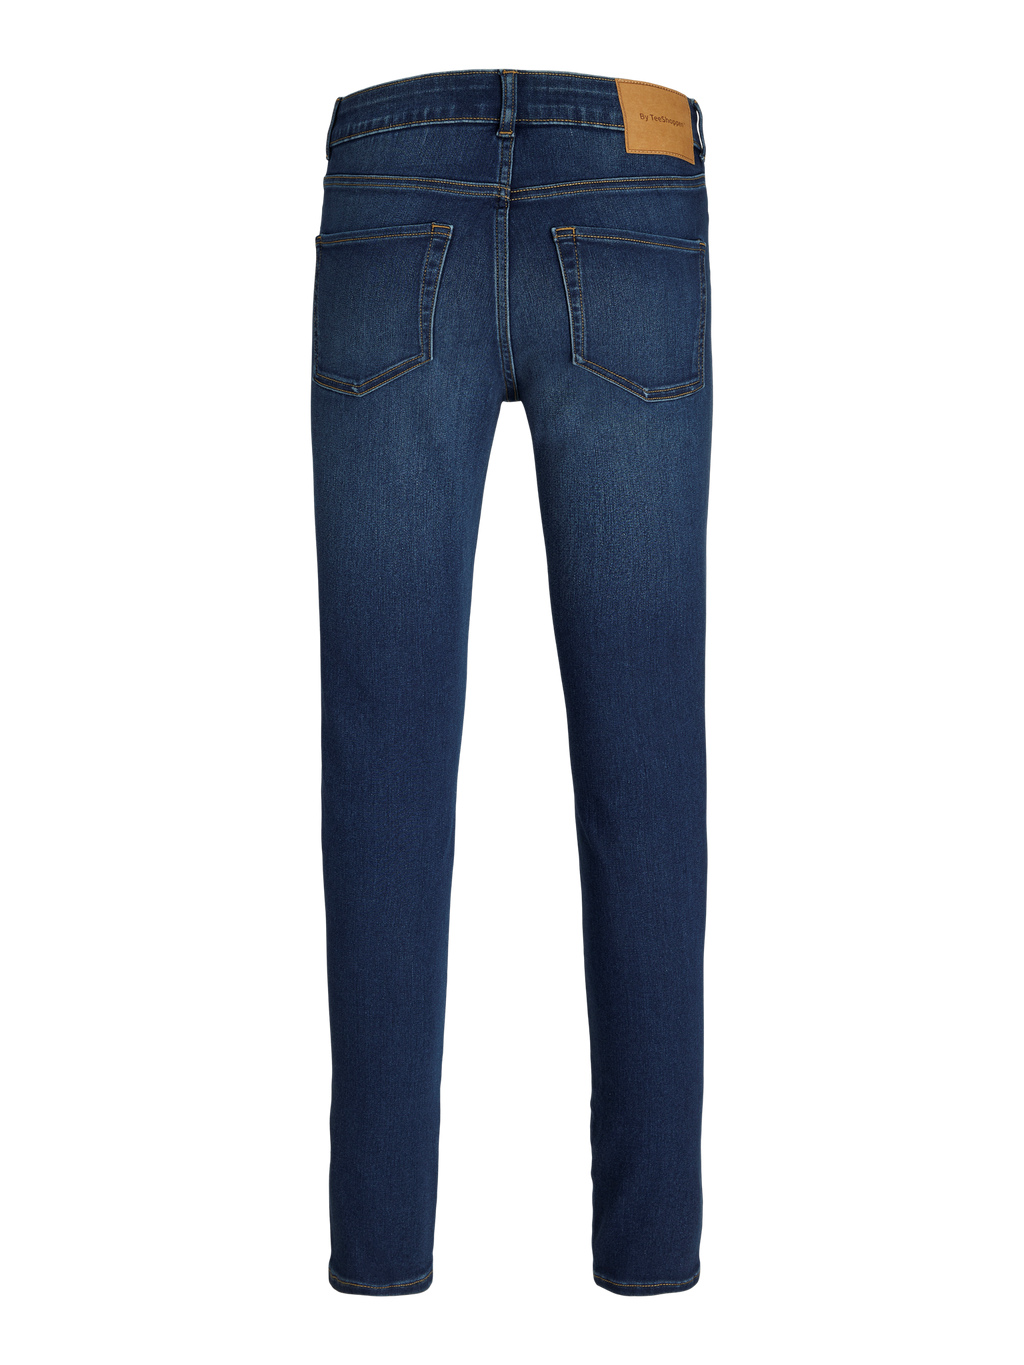 Performance Skinny Jeans - Medium Blue Denim